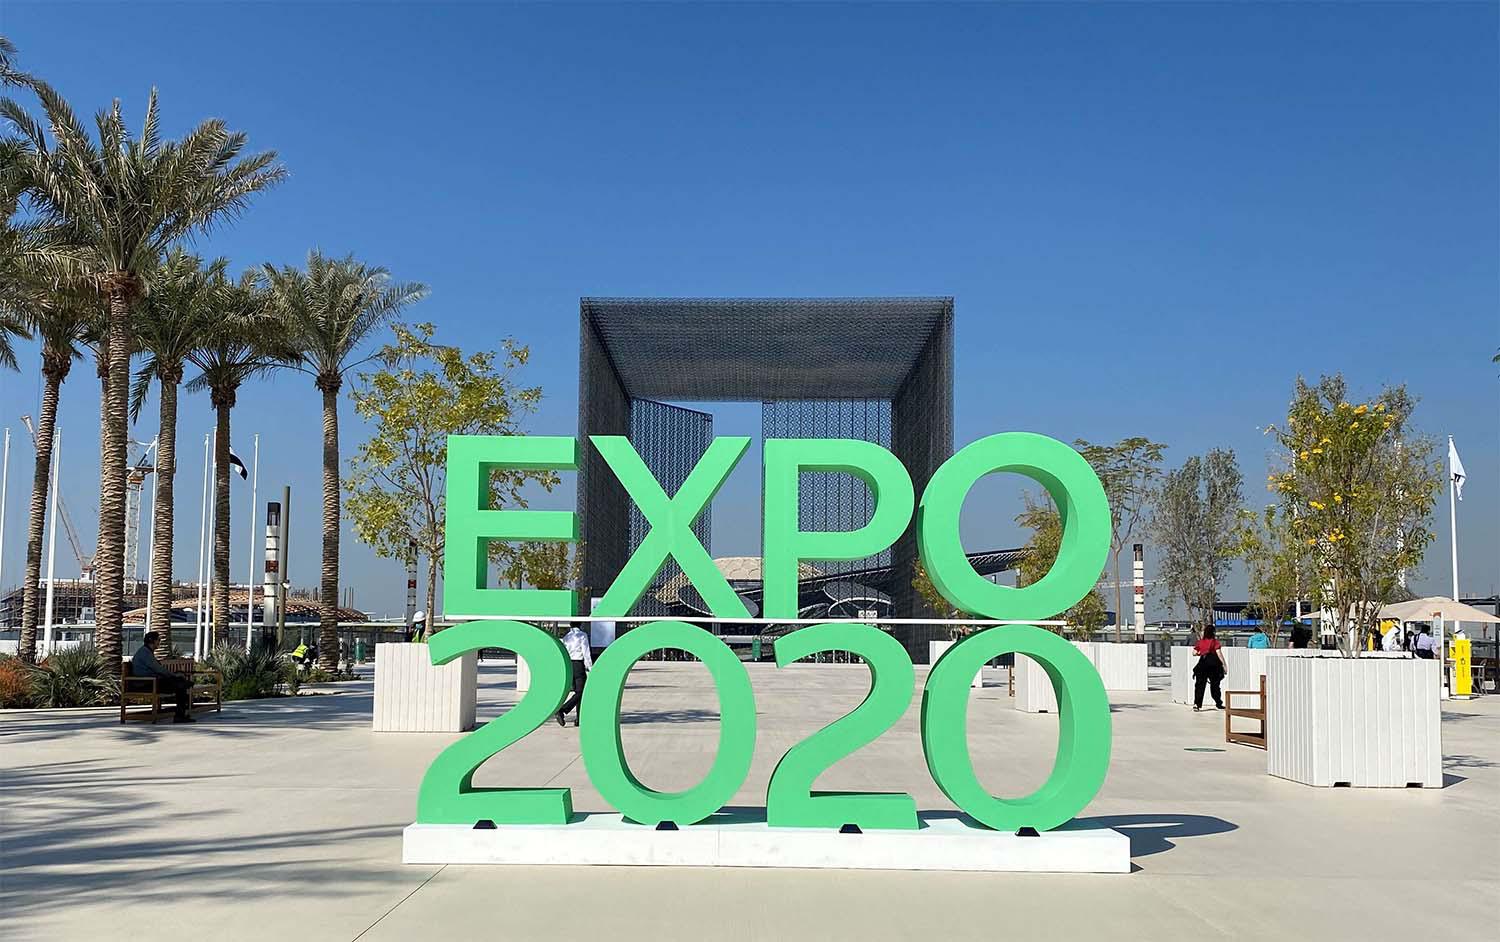 Dubai Expo 2020 will be held on October 1